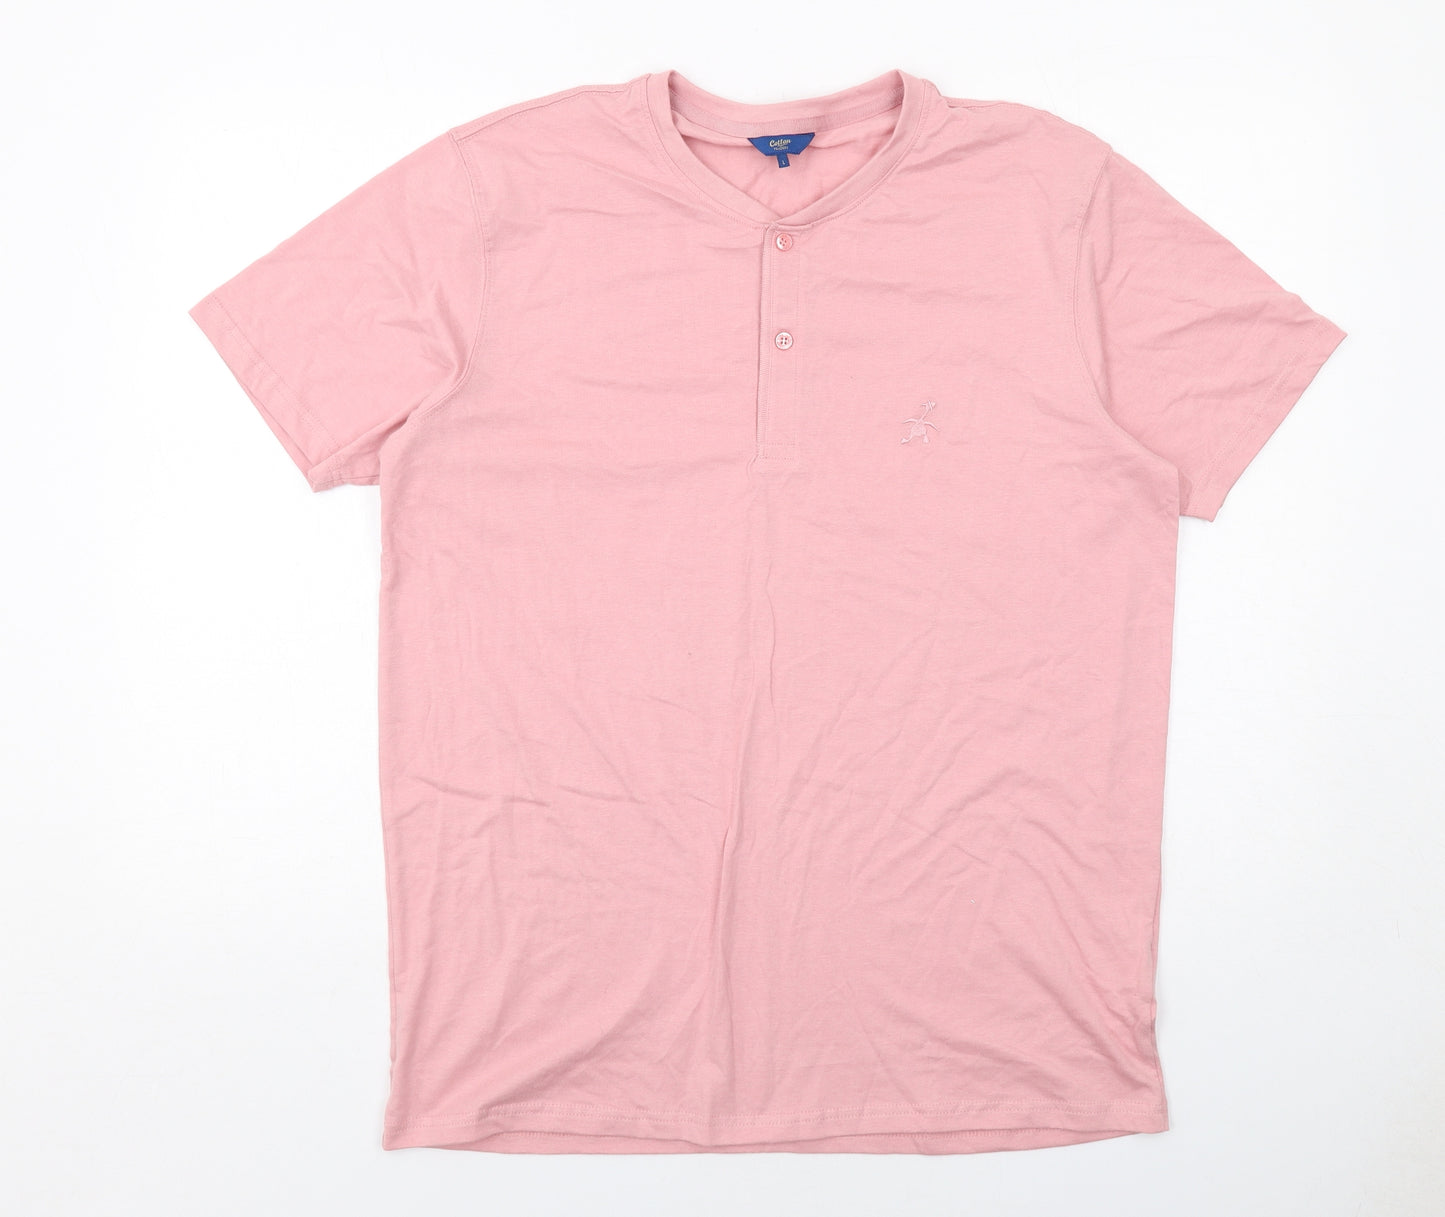 Cotton Traders Mens Pink Cotton T-Shirt Size L V-Neck